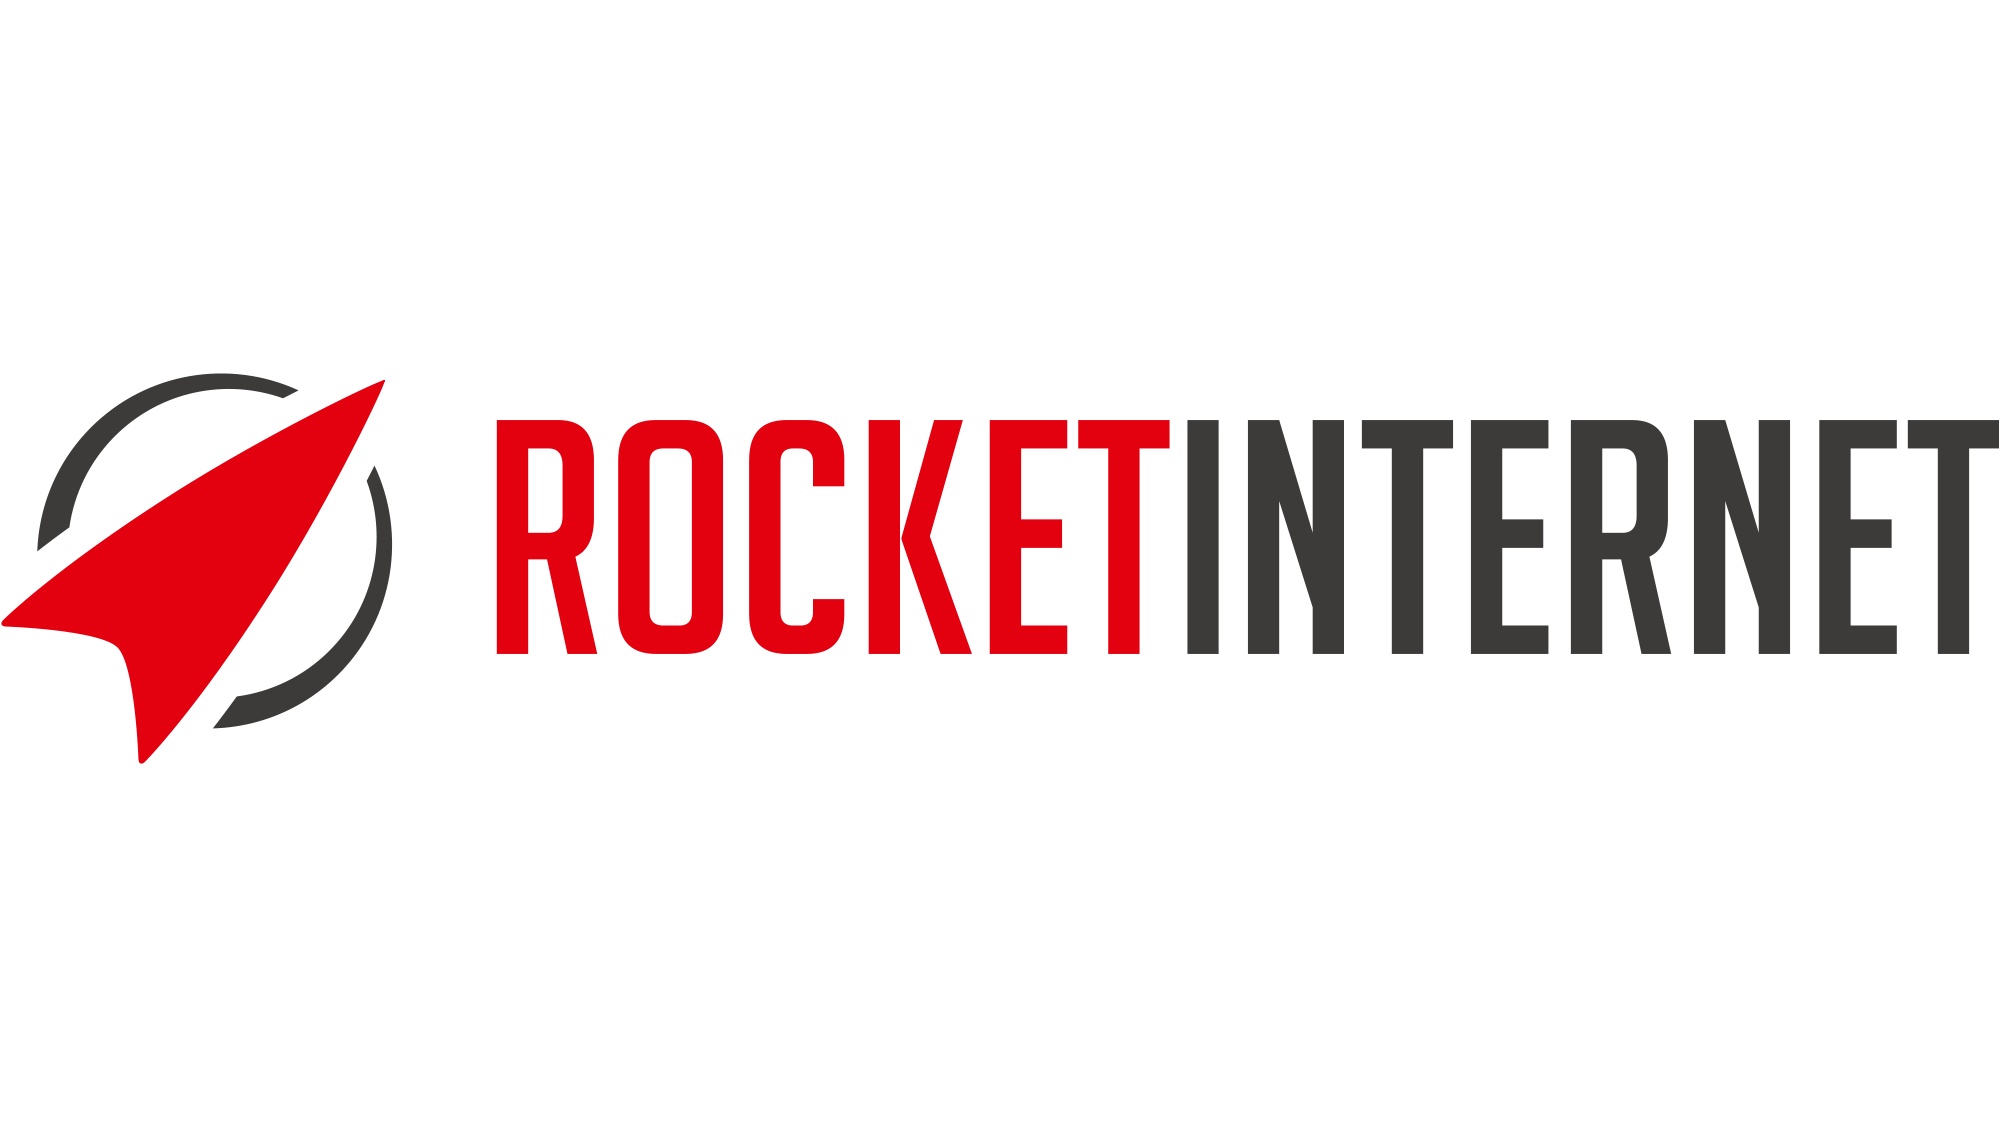 Rocket Internet Kursziel